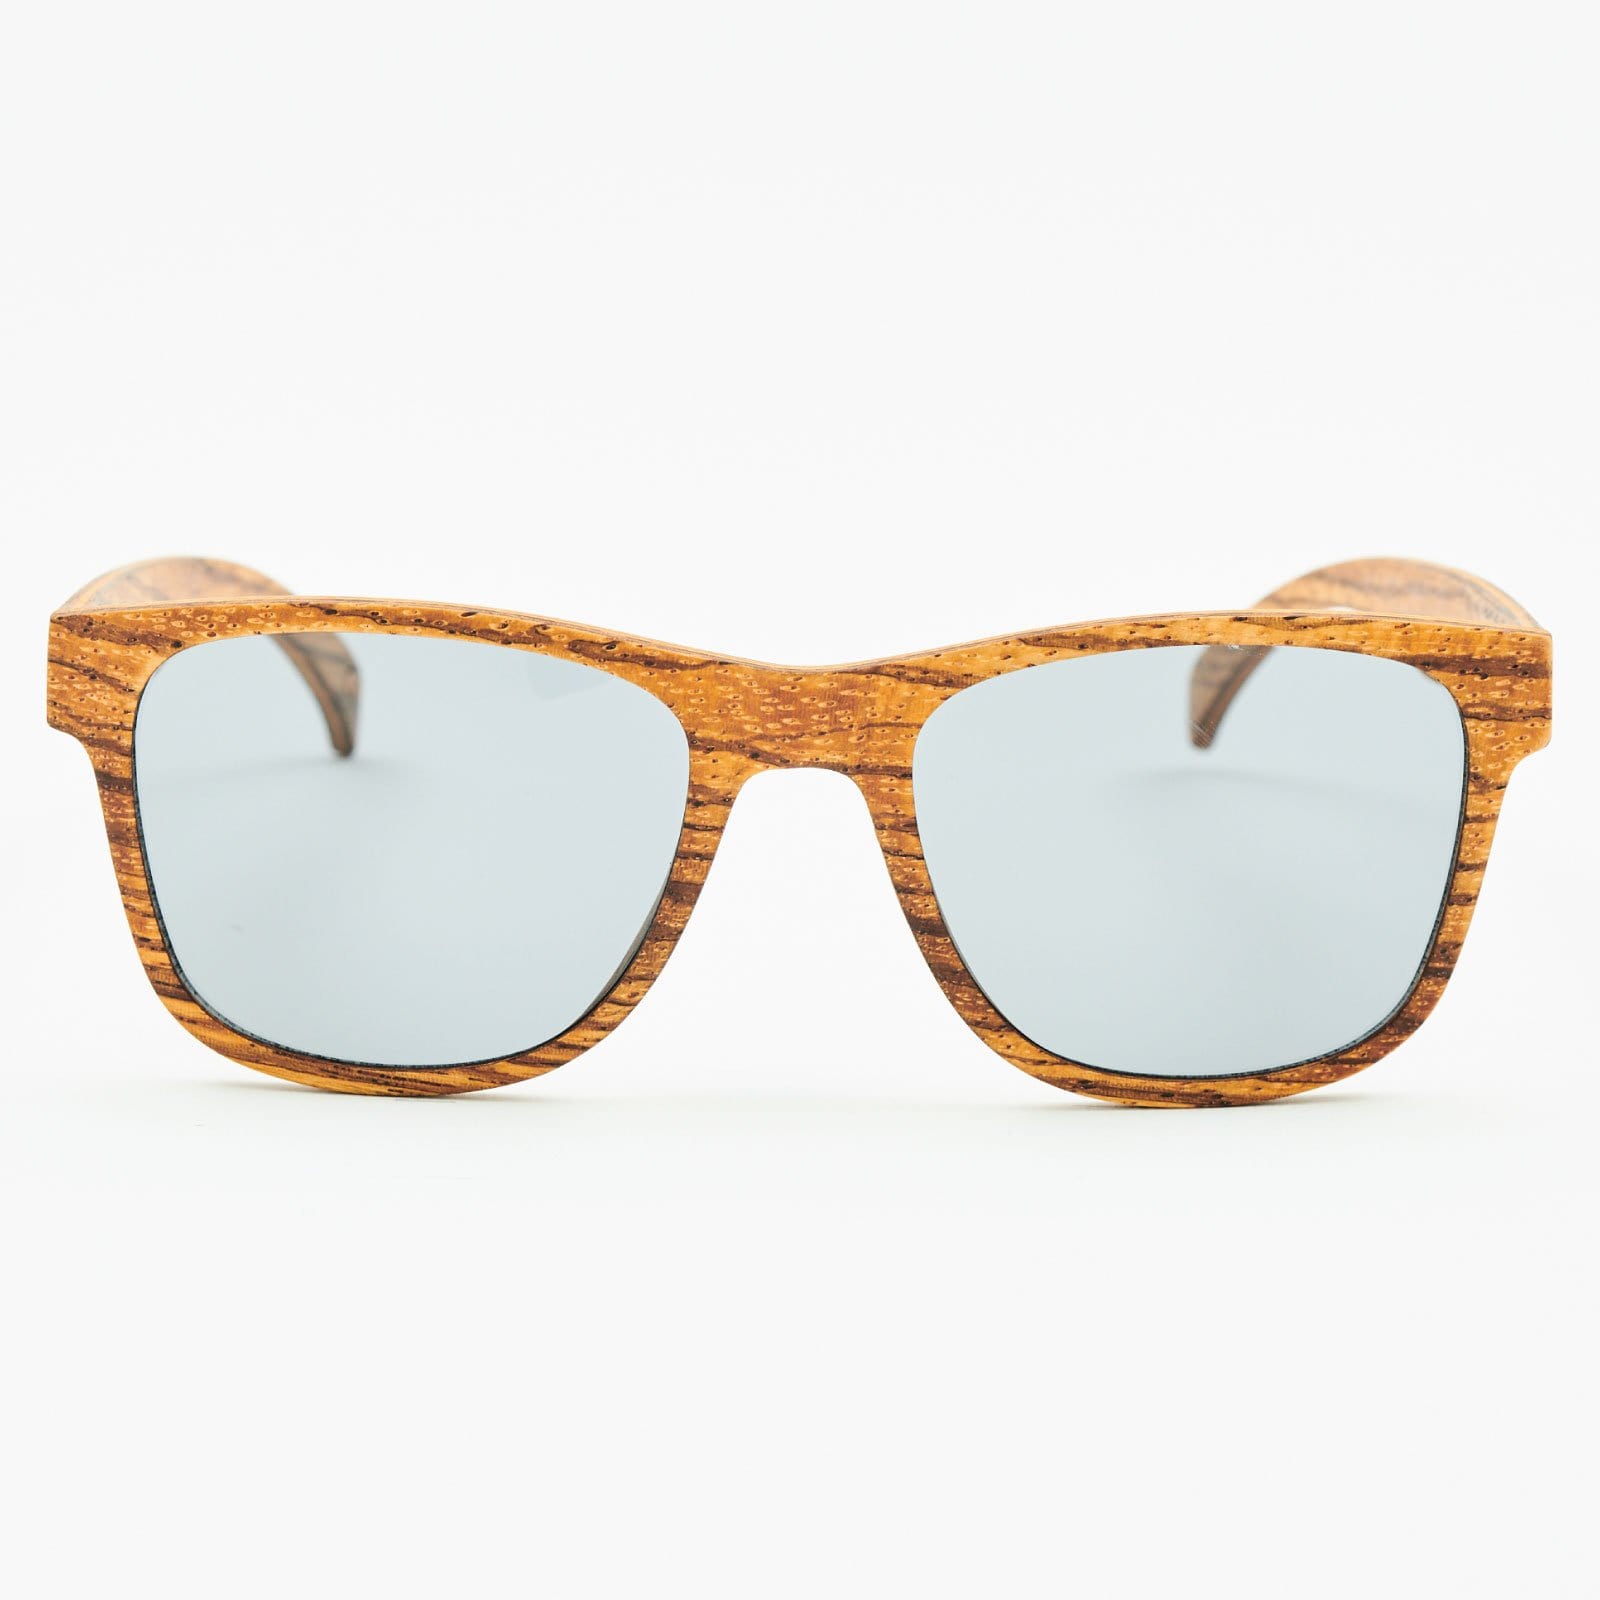 Wooden Watch + Wood Sunglasses + Wood Bracelet Gift Box Set